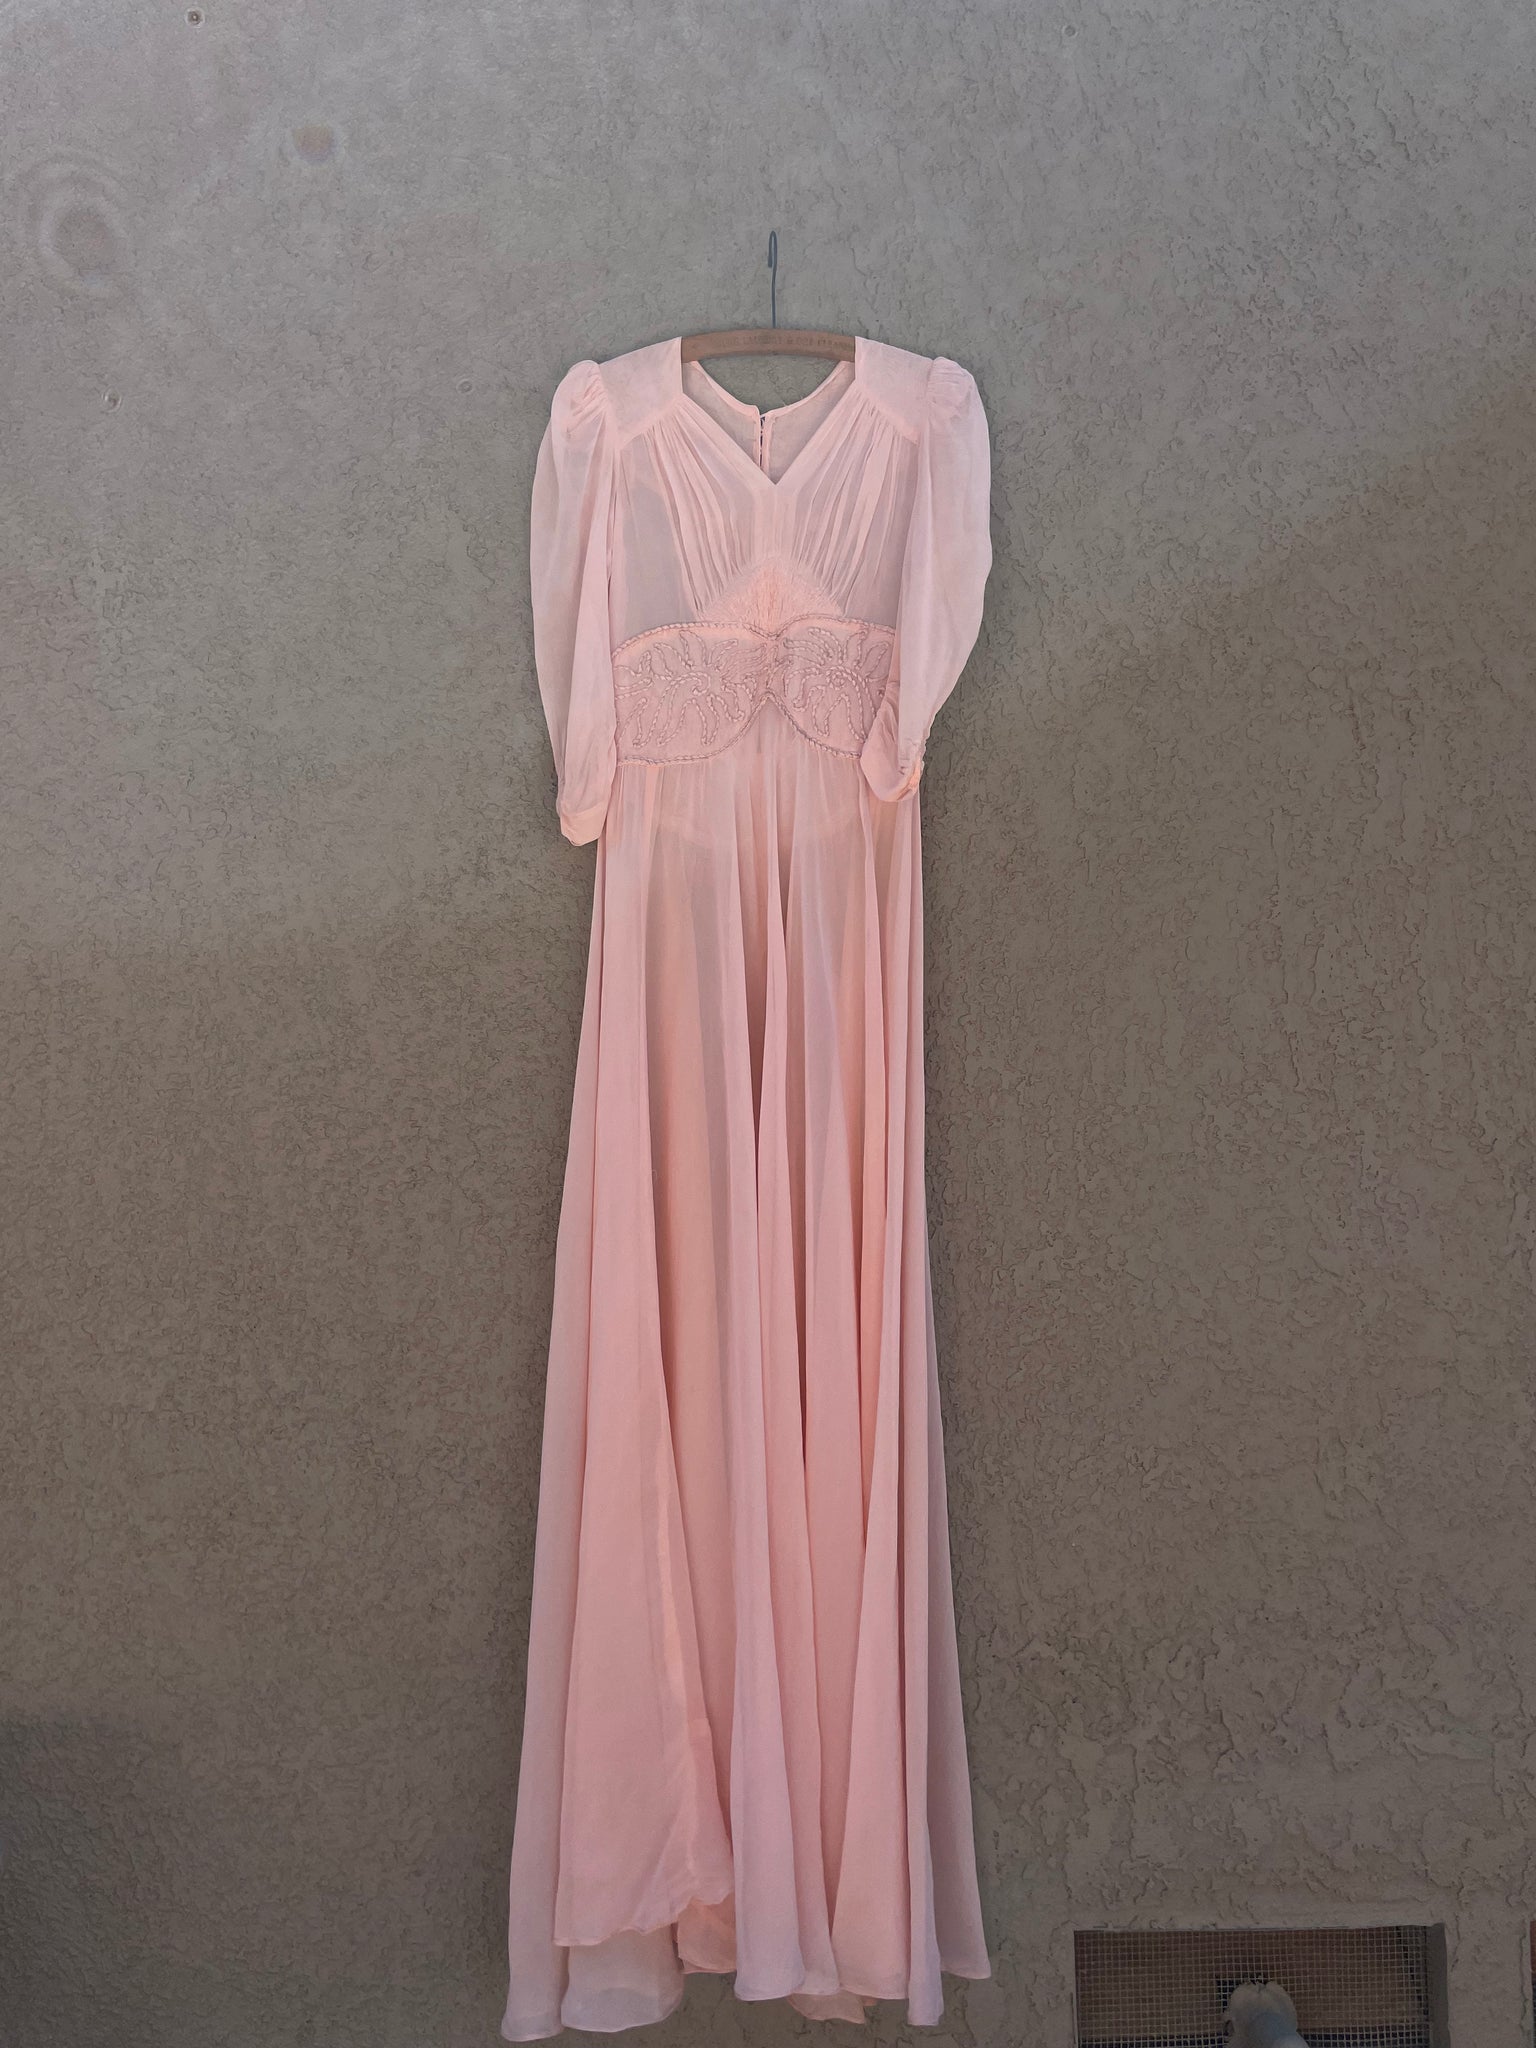 1940s Pale Pink Smocked Dress